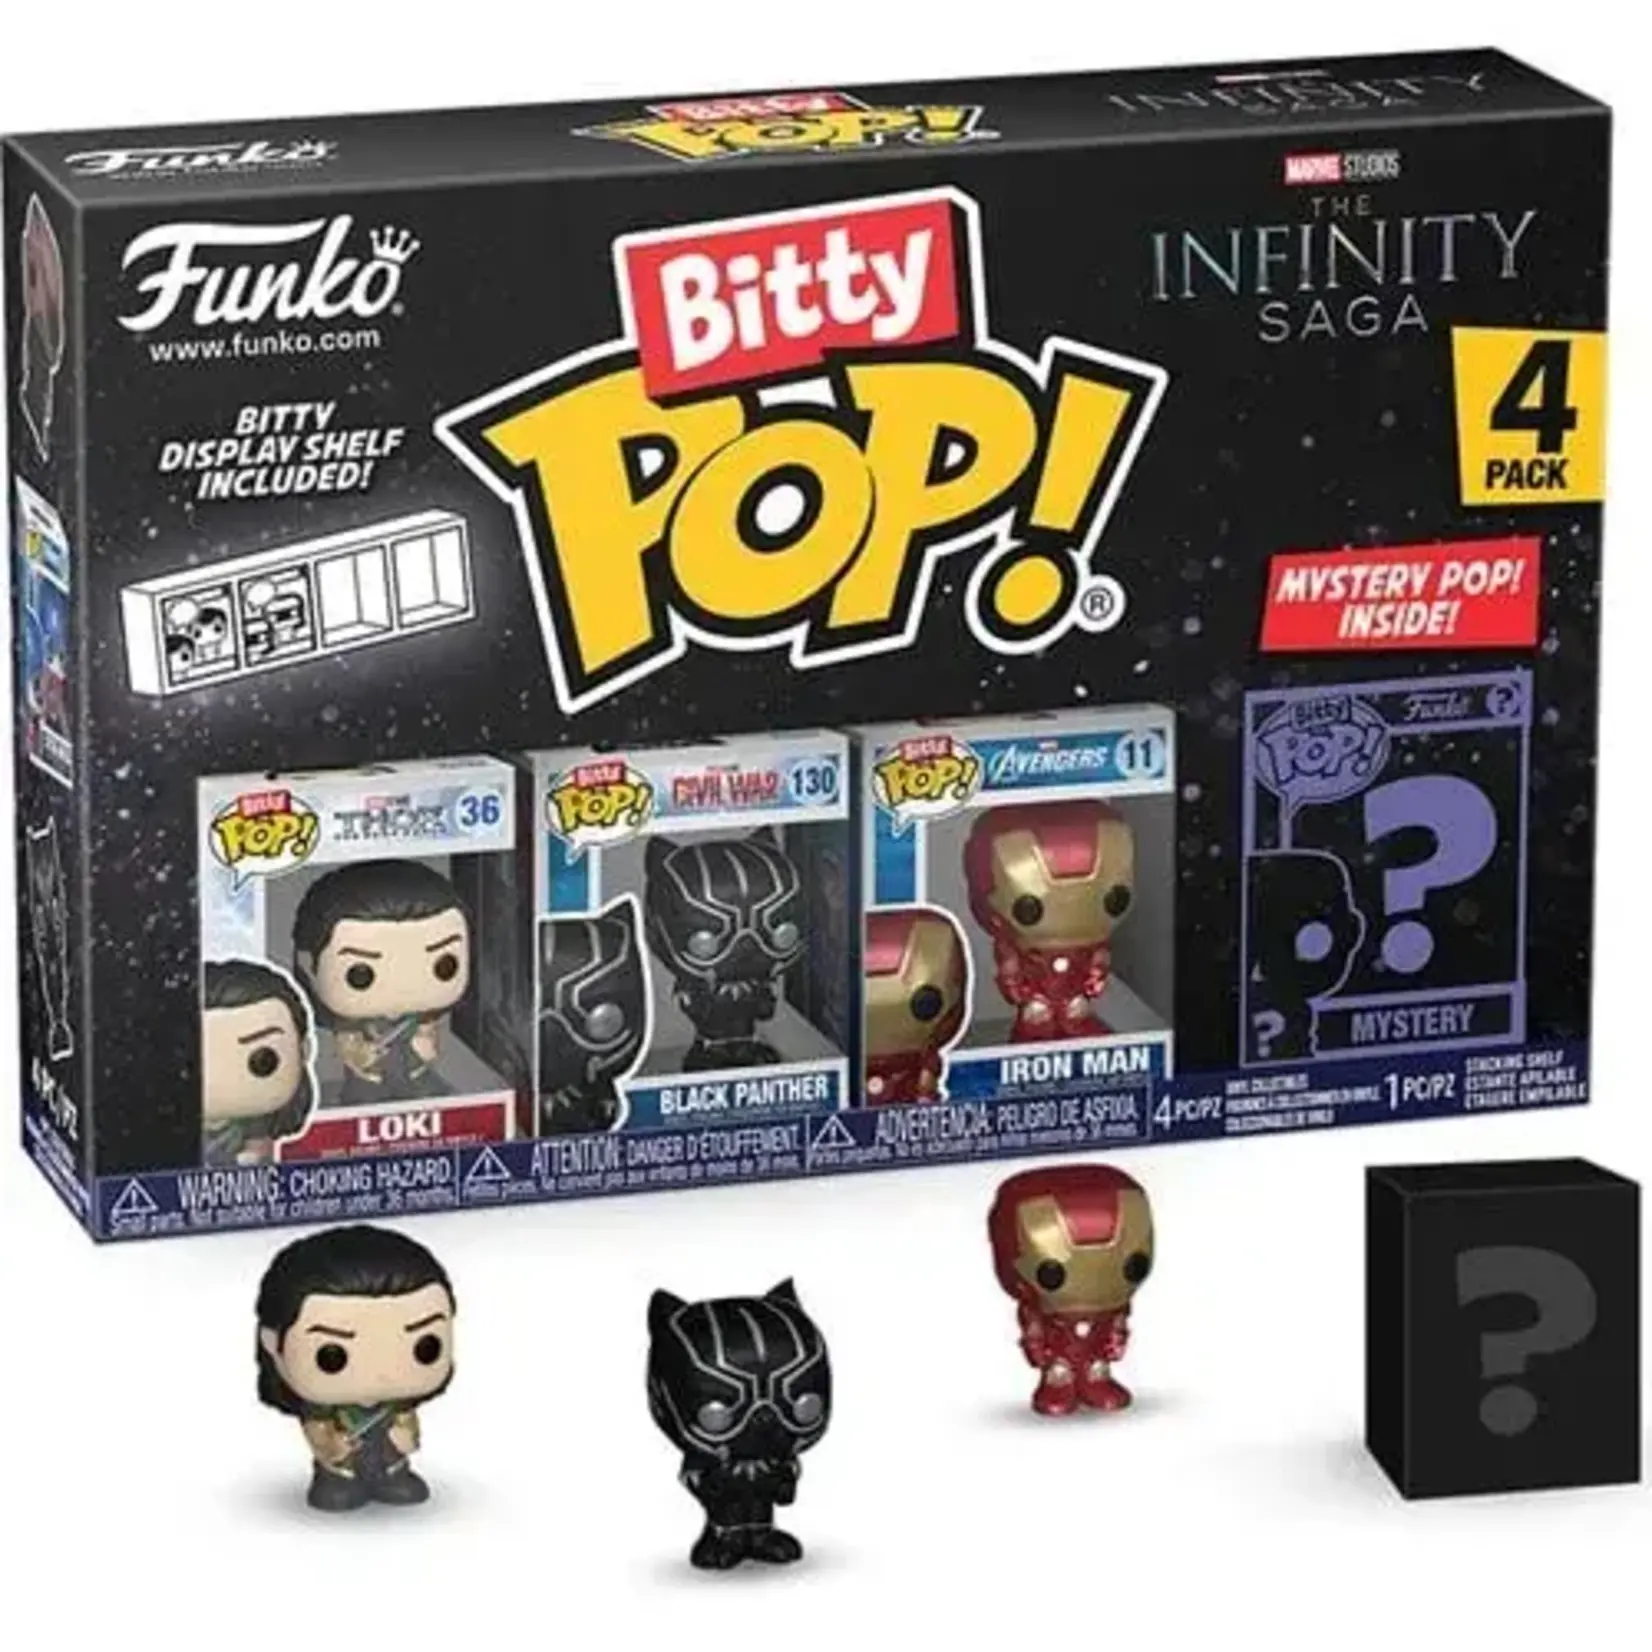 Funko Funko Bitty POP!: The Avengers Loki / Black Panther / Iron Man / Mystery - 4 Pack